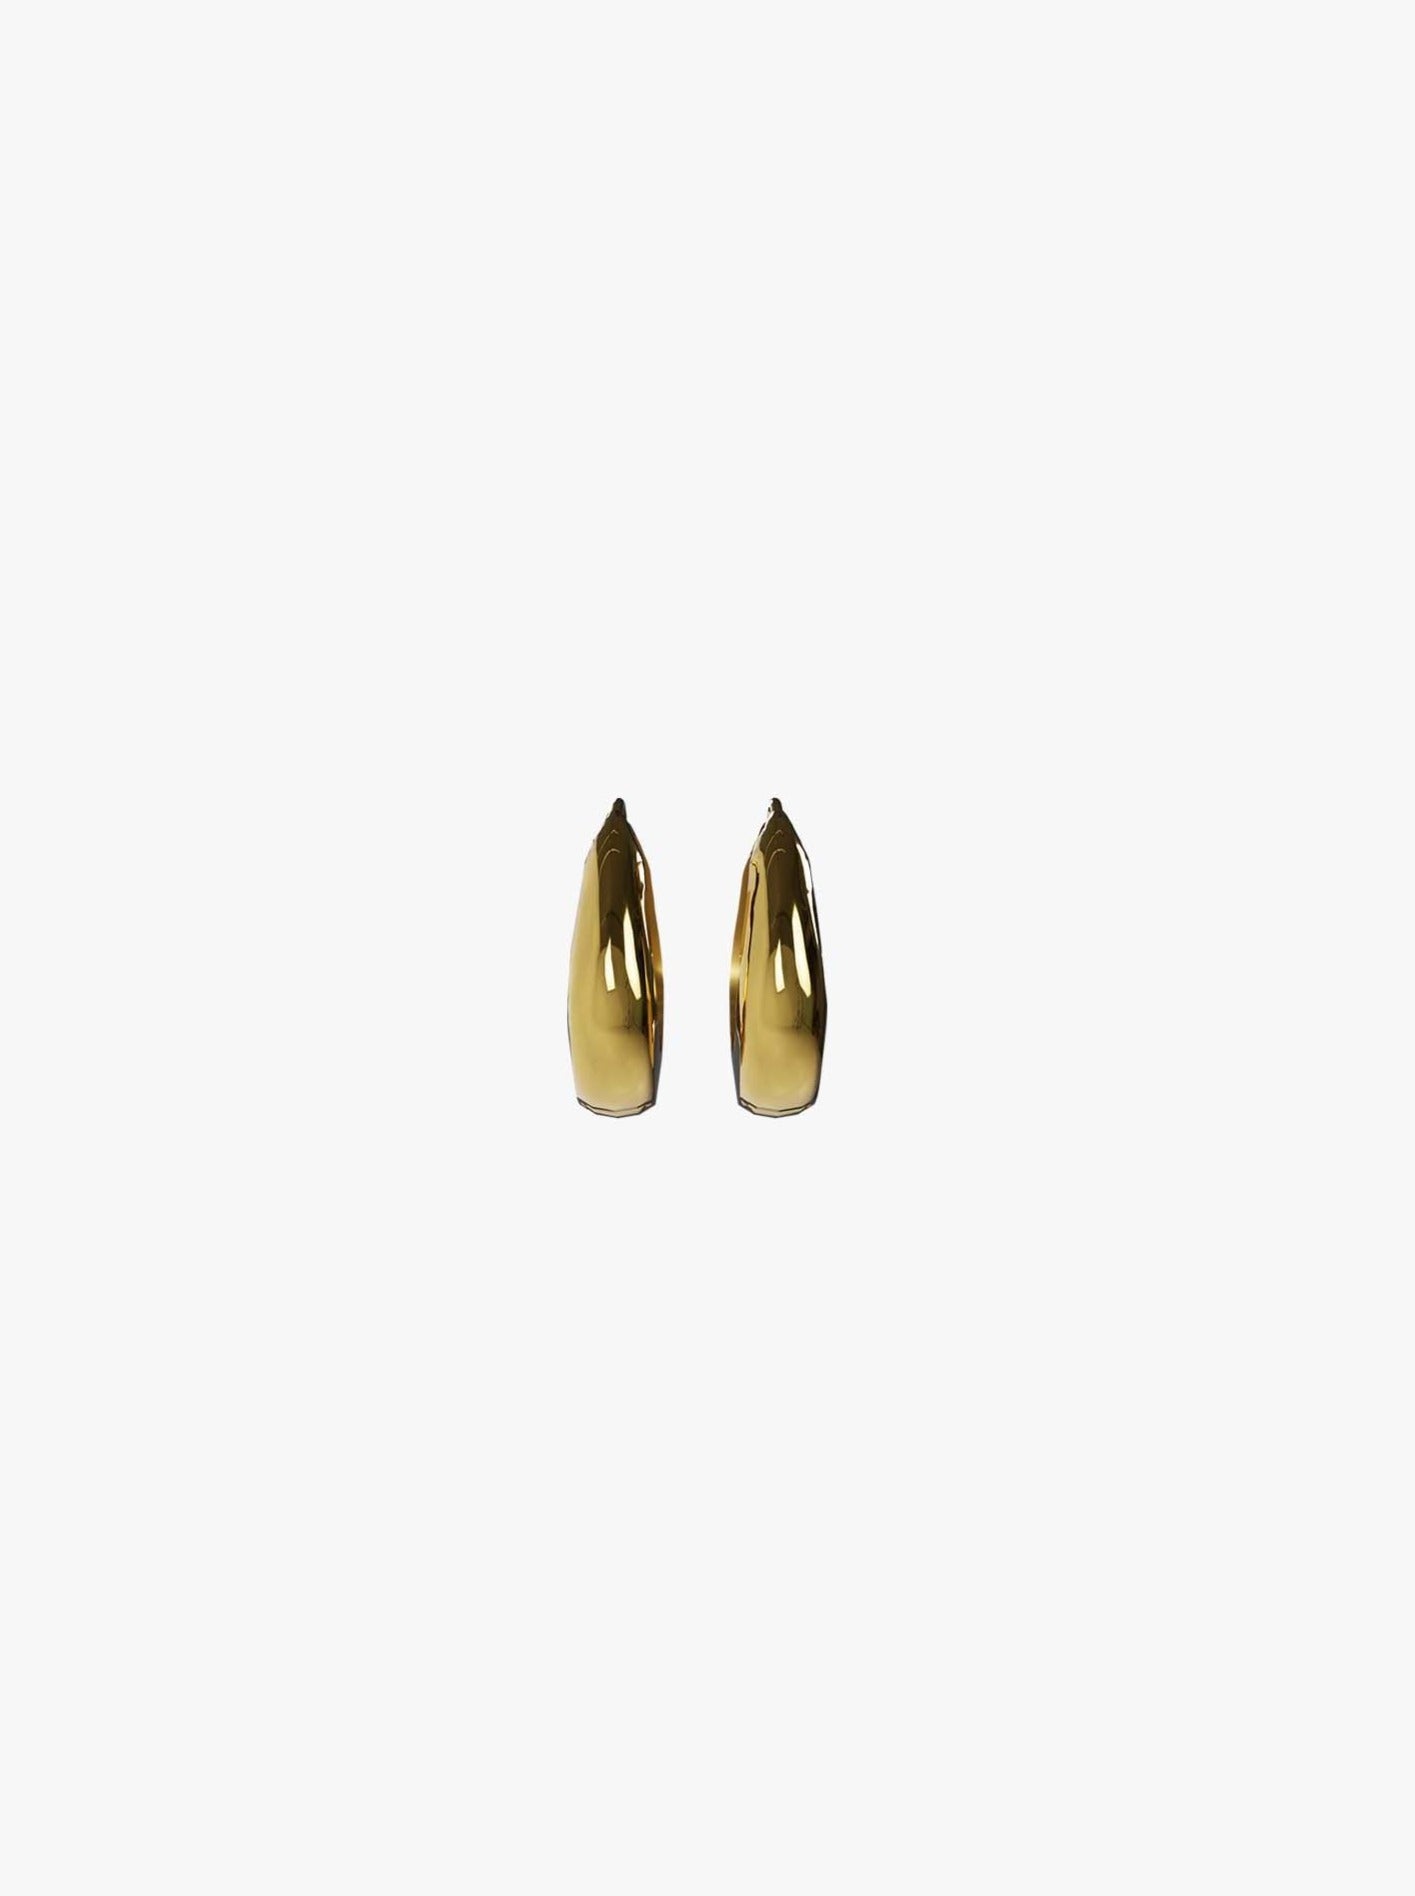 Riz gold earrings (pair)